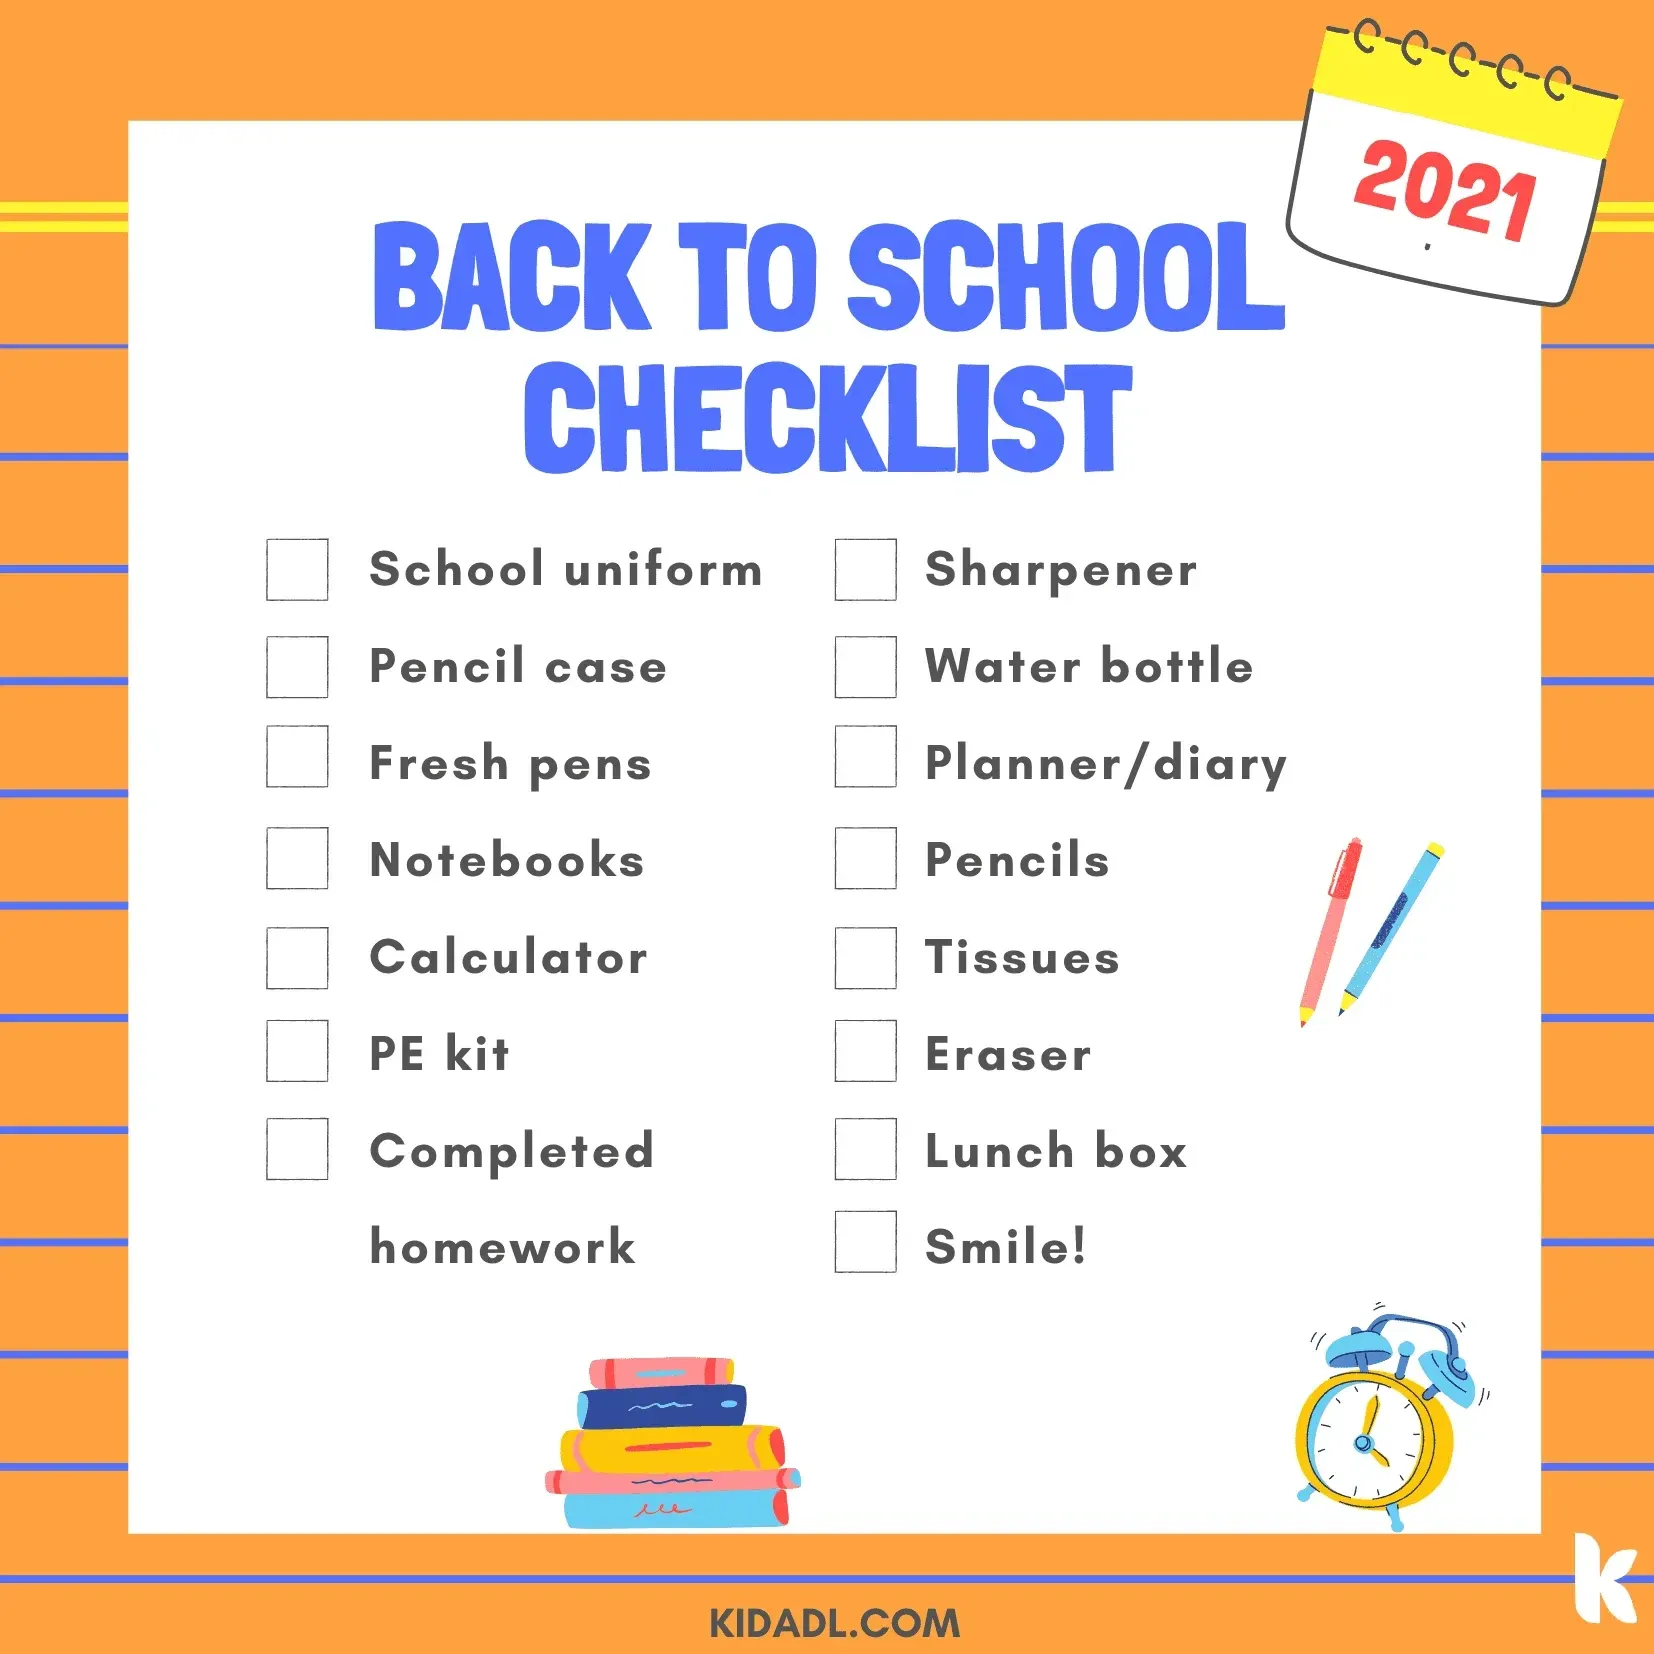 Read this back to School Bingo checklist to prepare for school.